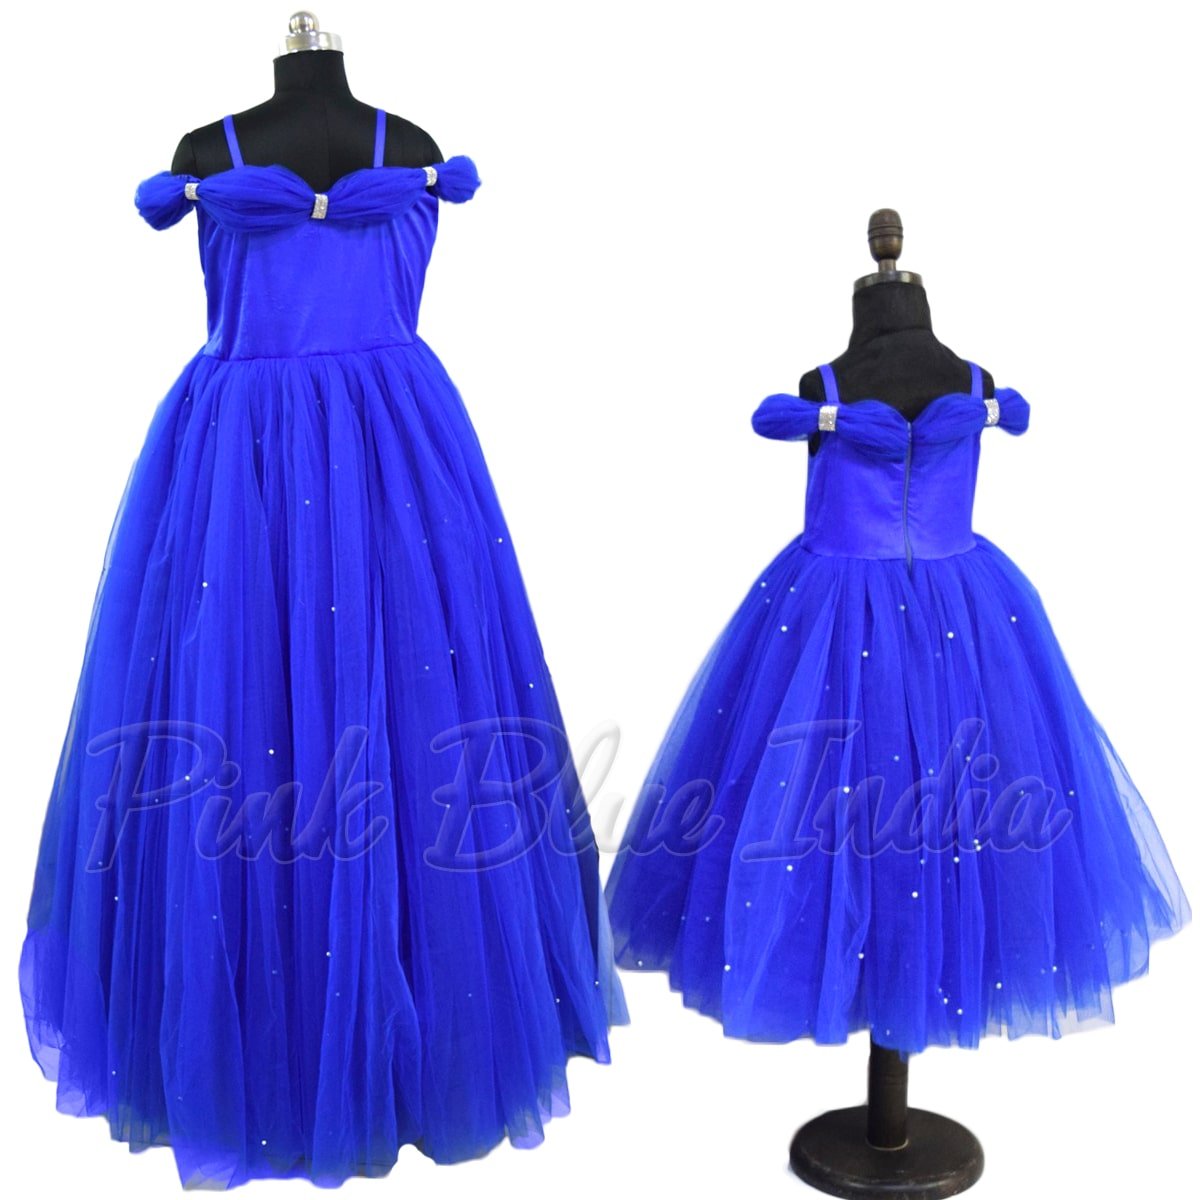 Buy Cinderella Gothic Black Wedding Halloween Dress Online in India - Etsy